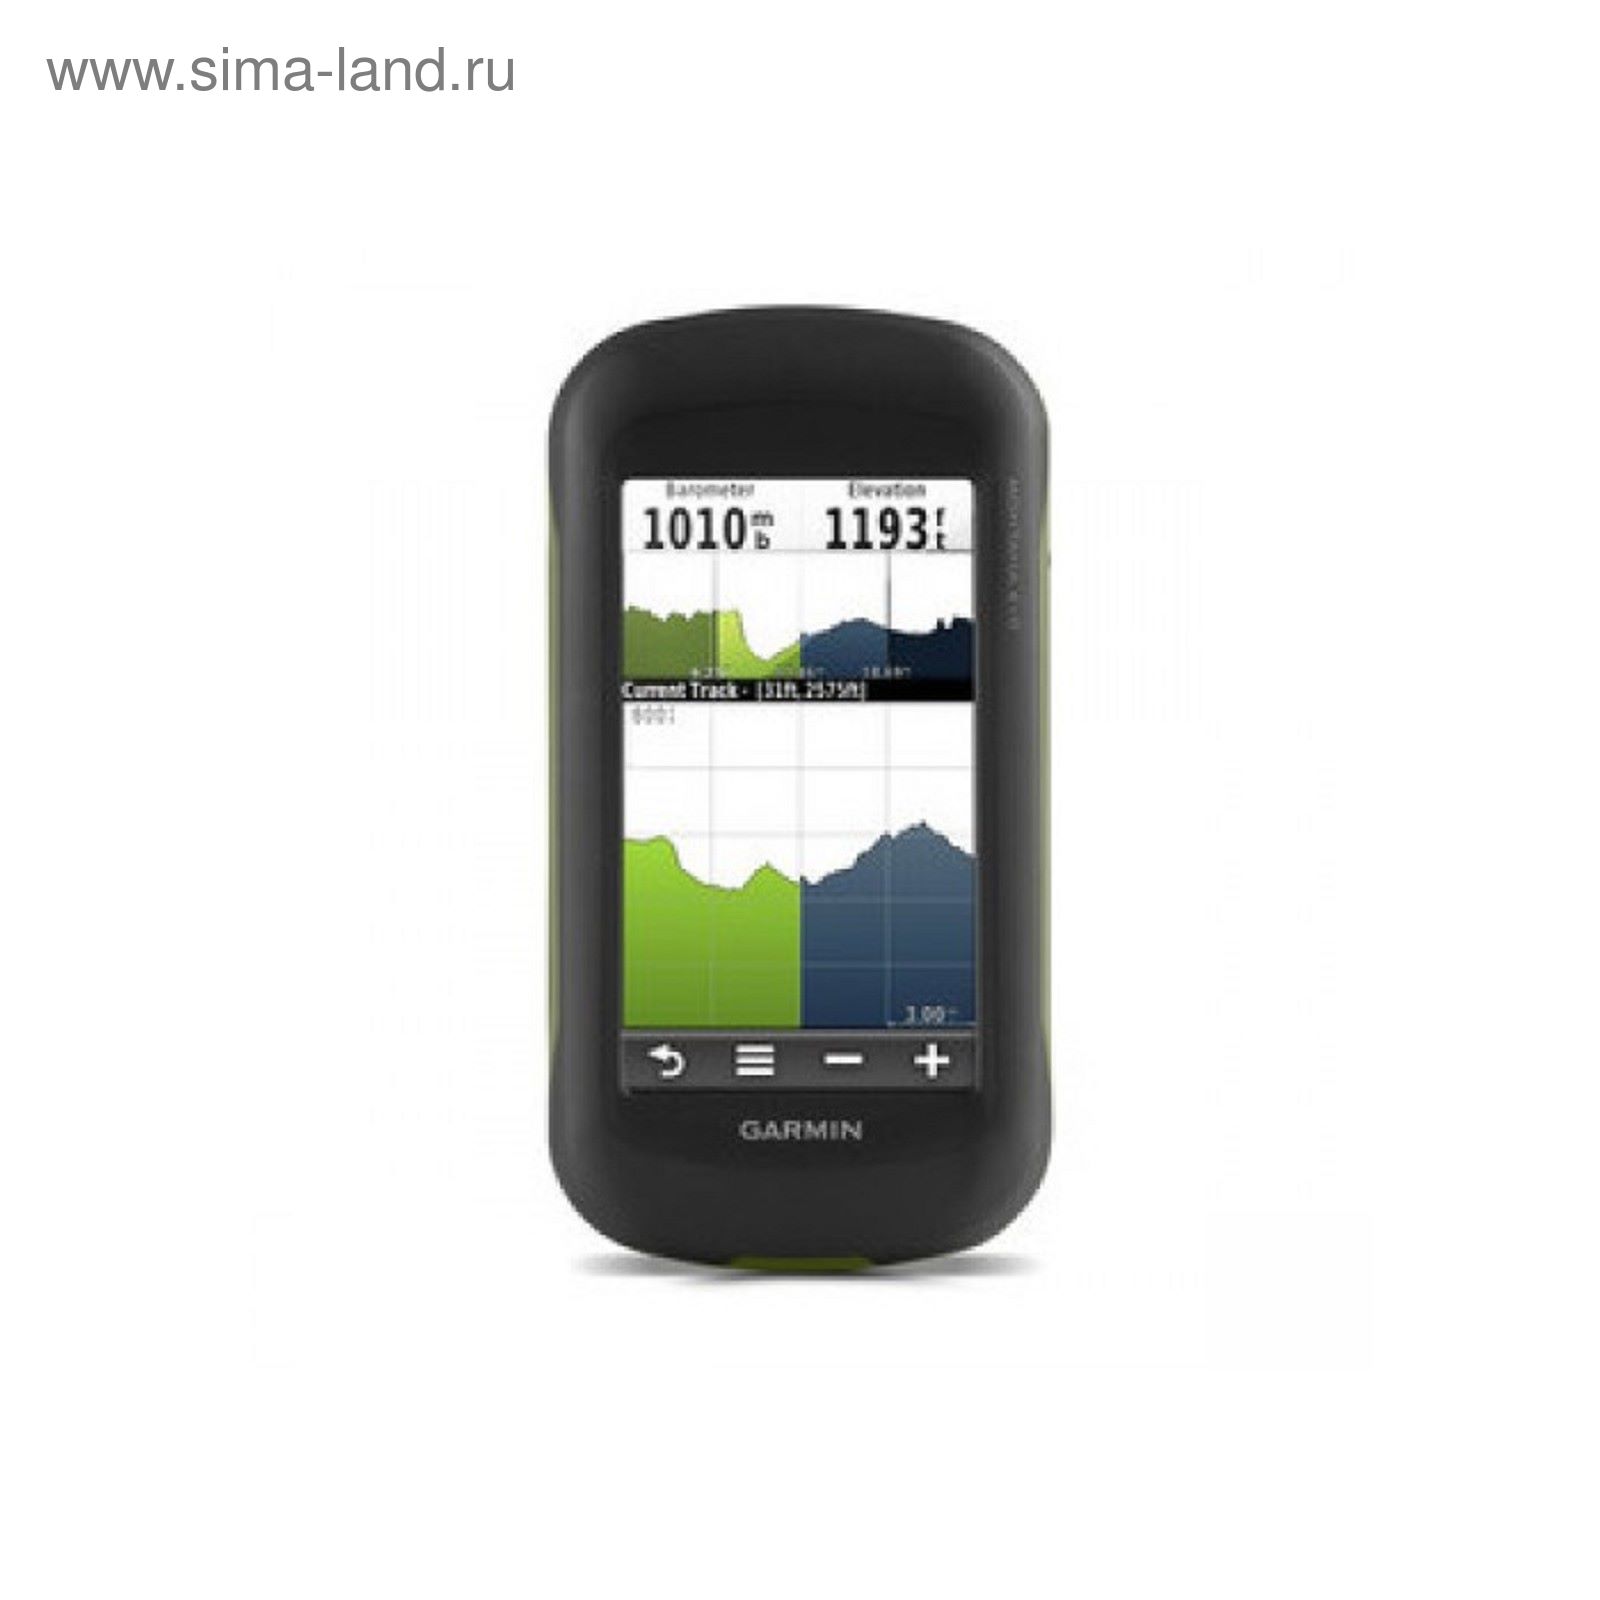 GPS-навигатор Garmin Montana 610t GPS/GLONASS Russia